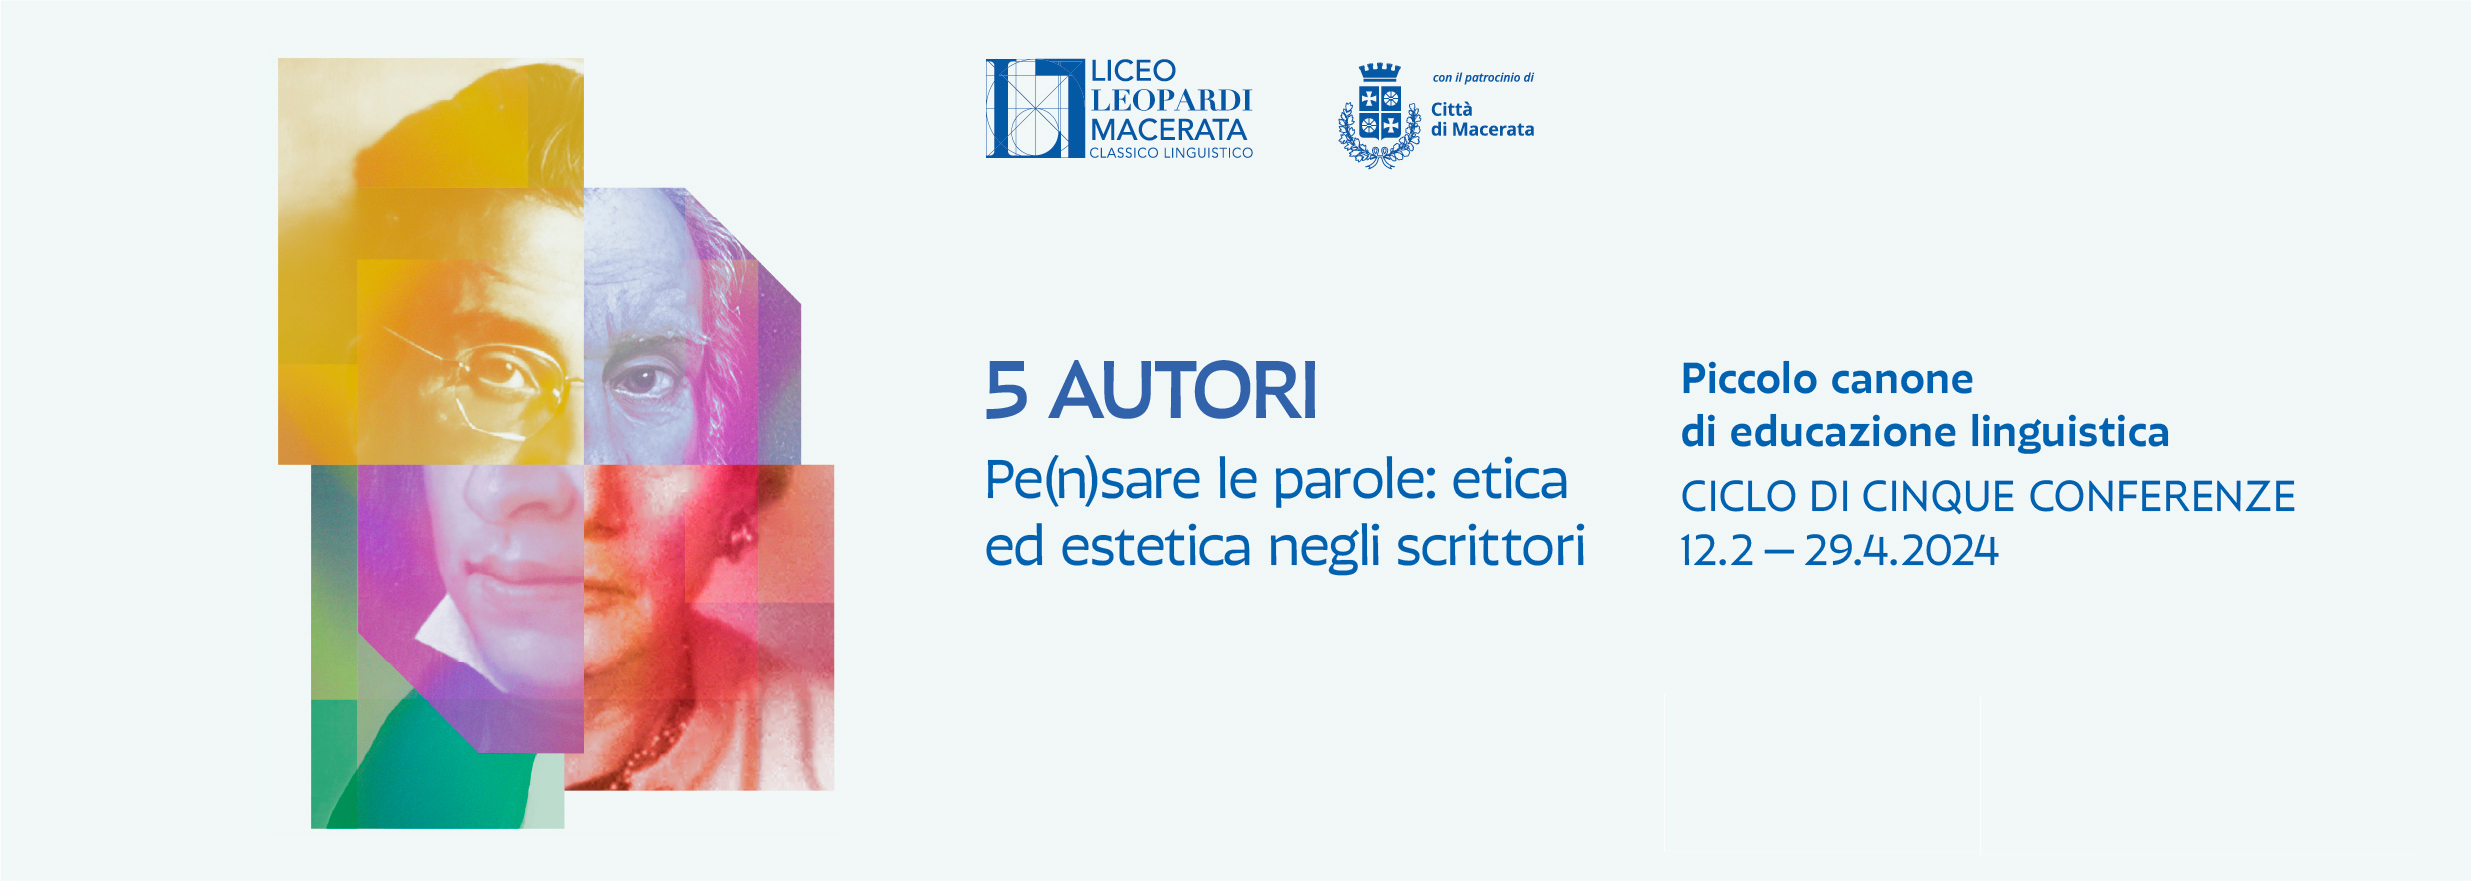  - slide 2 - Liceo Statale G. Leopardi Macerata